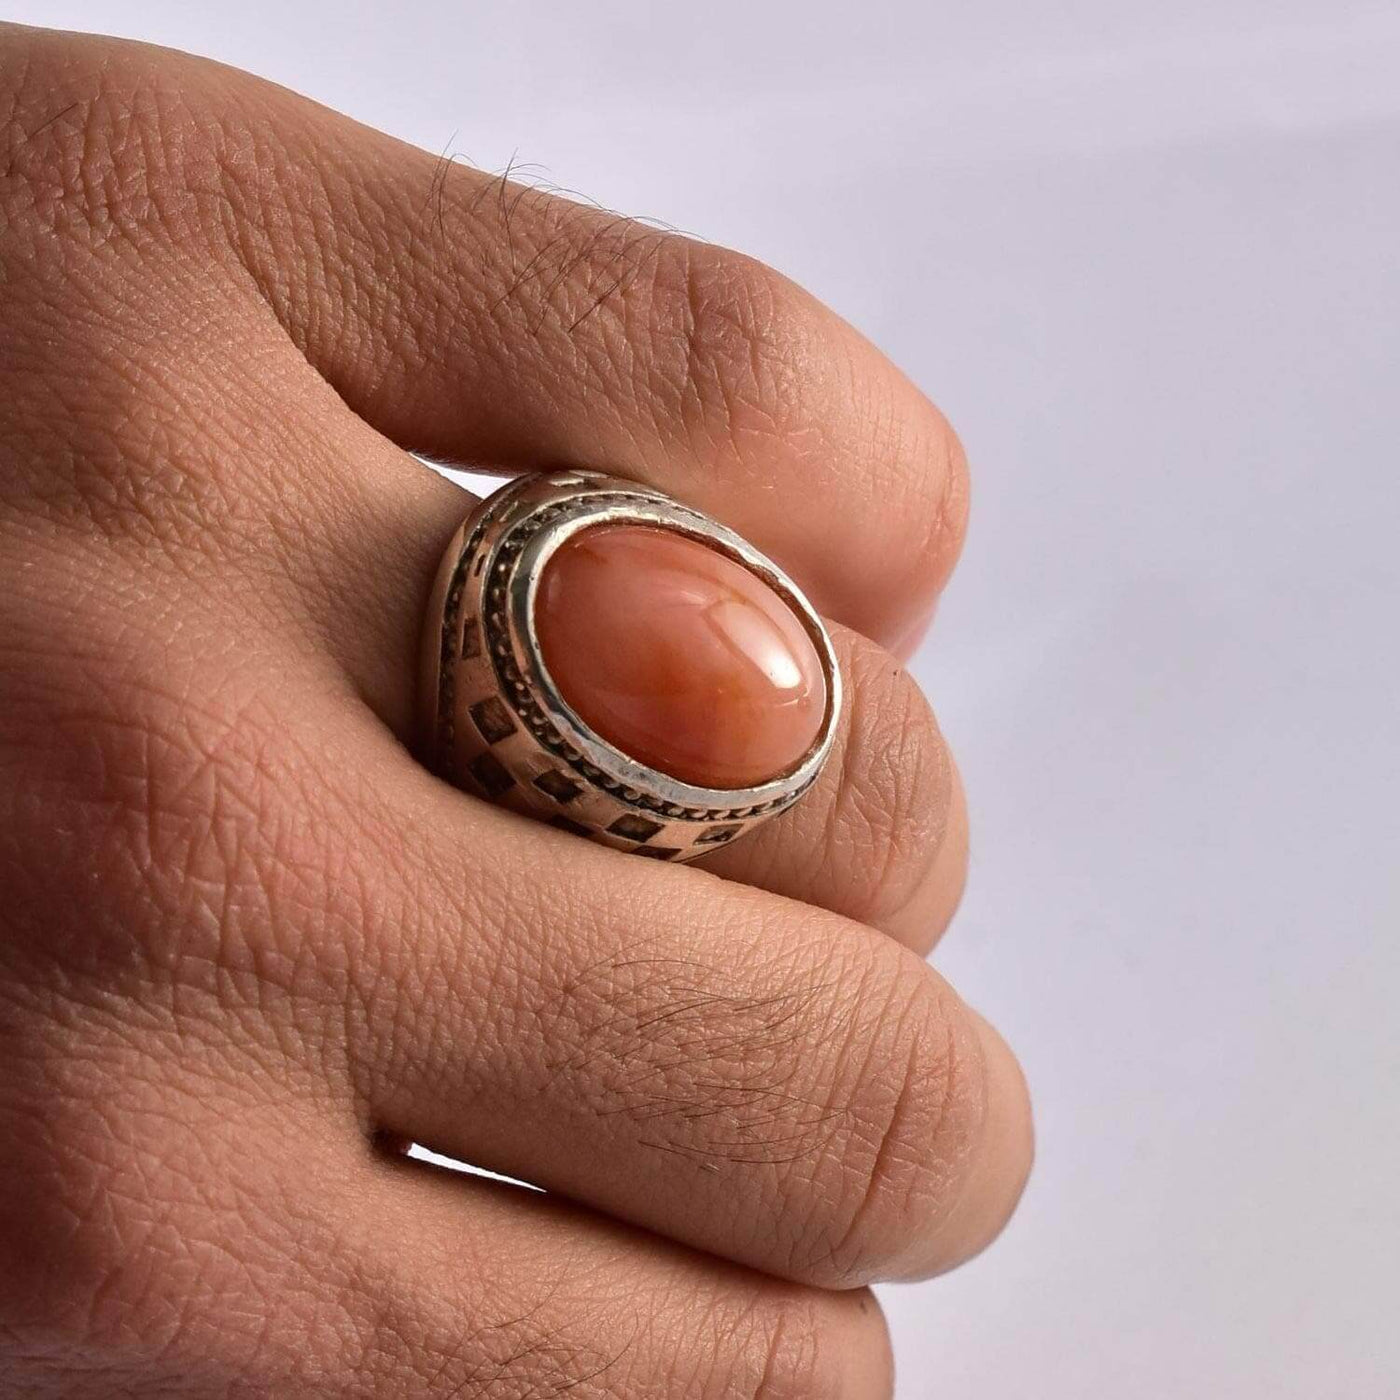 Dur e Najaf Ring Silver | خاتم در النجف الاصلي | AlAliGems | Red Dur Hussaini Stone Ring Size 10.5 - Al Ali Gems